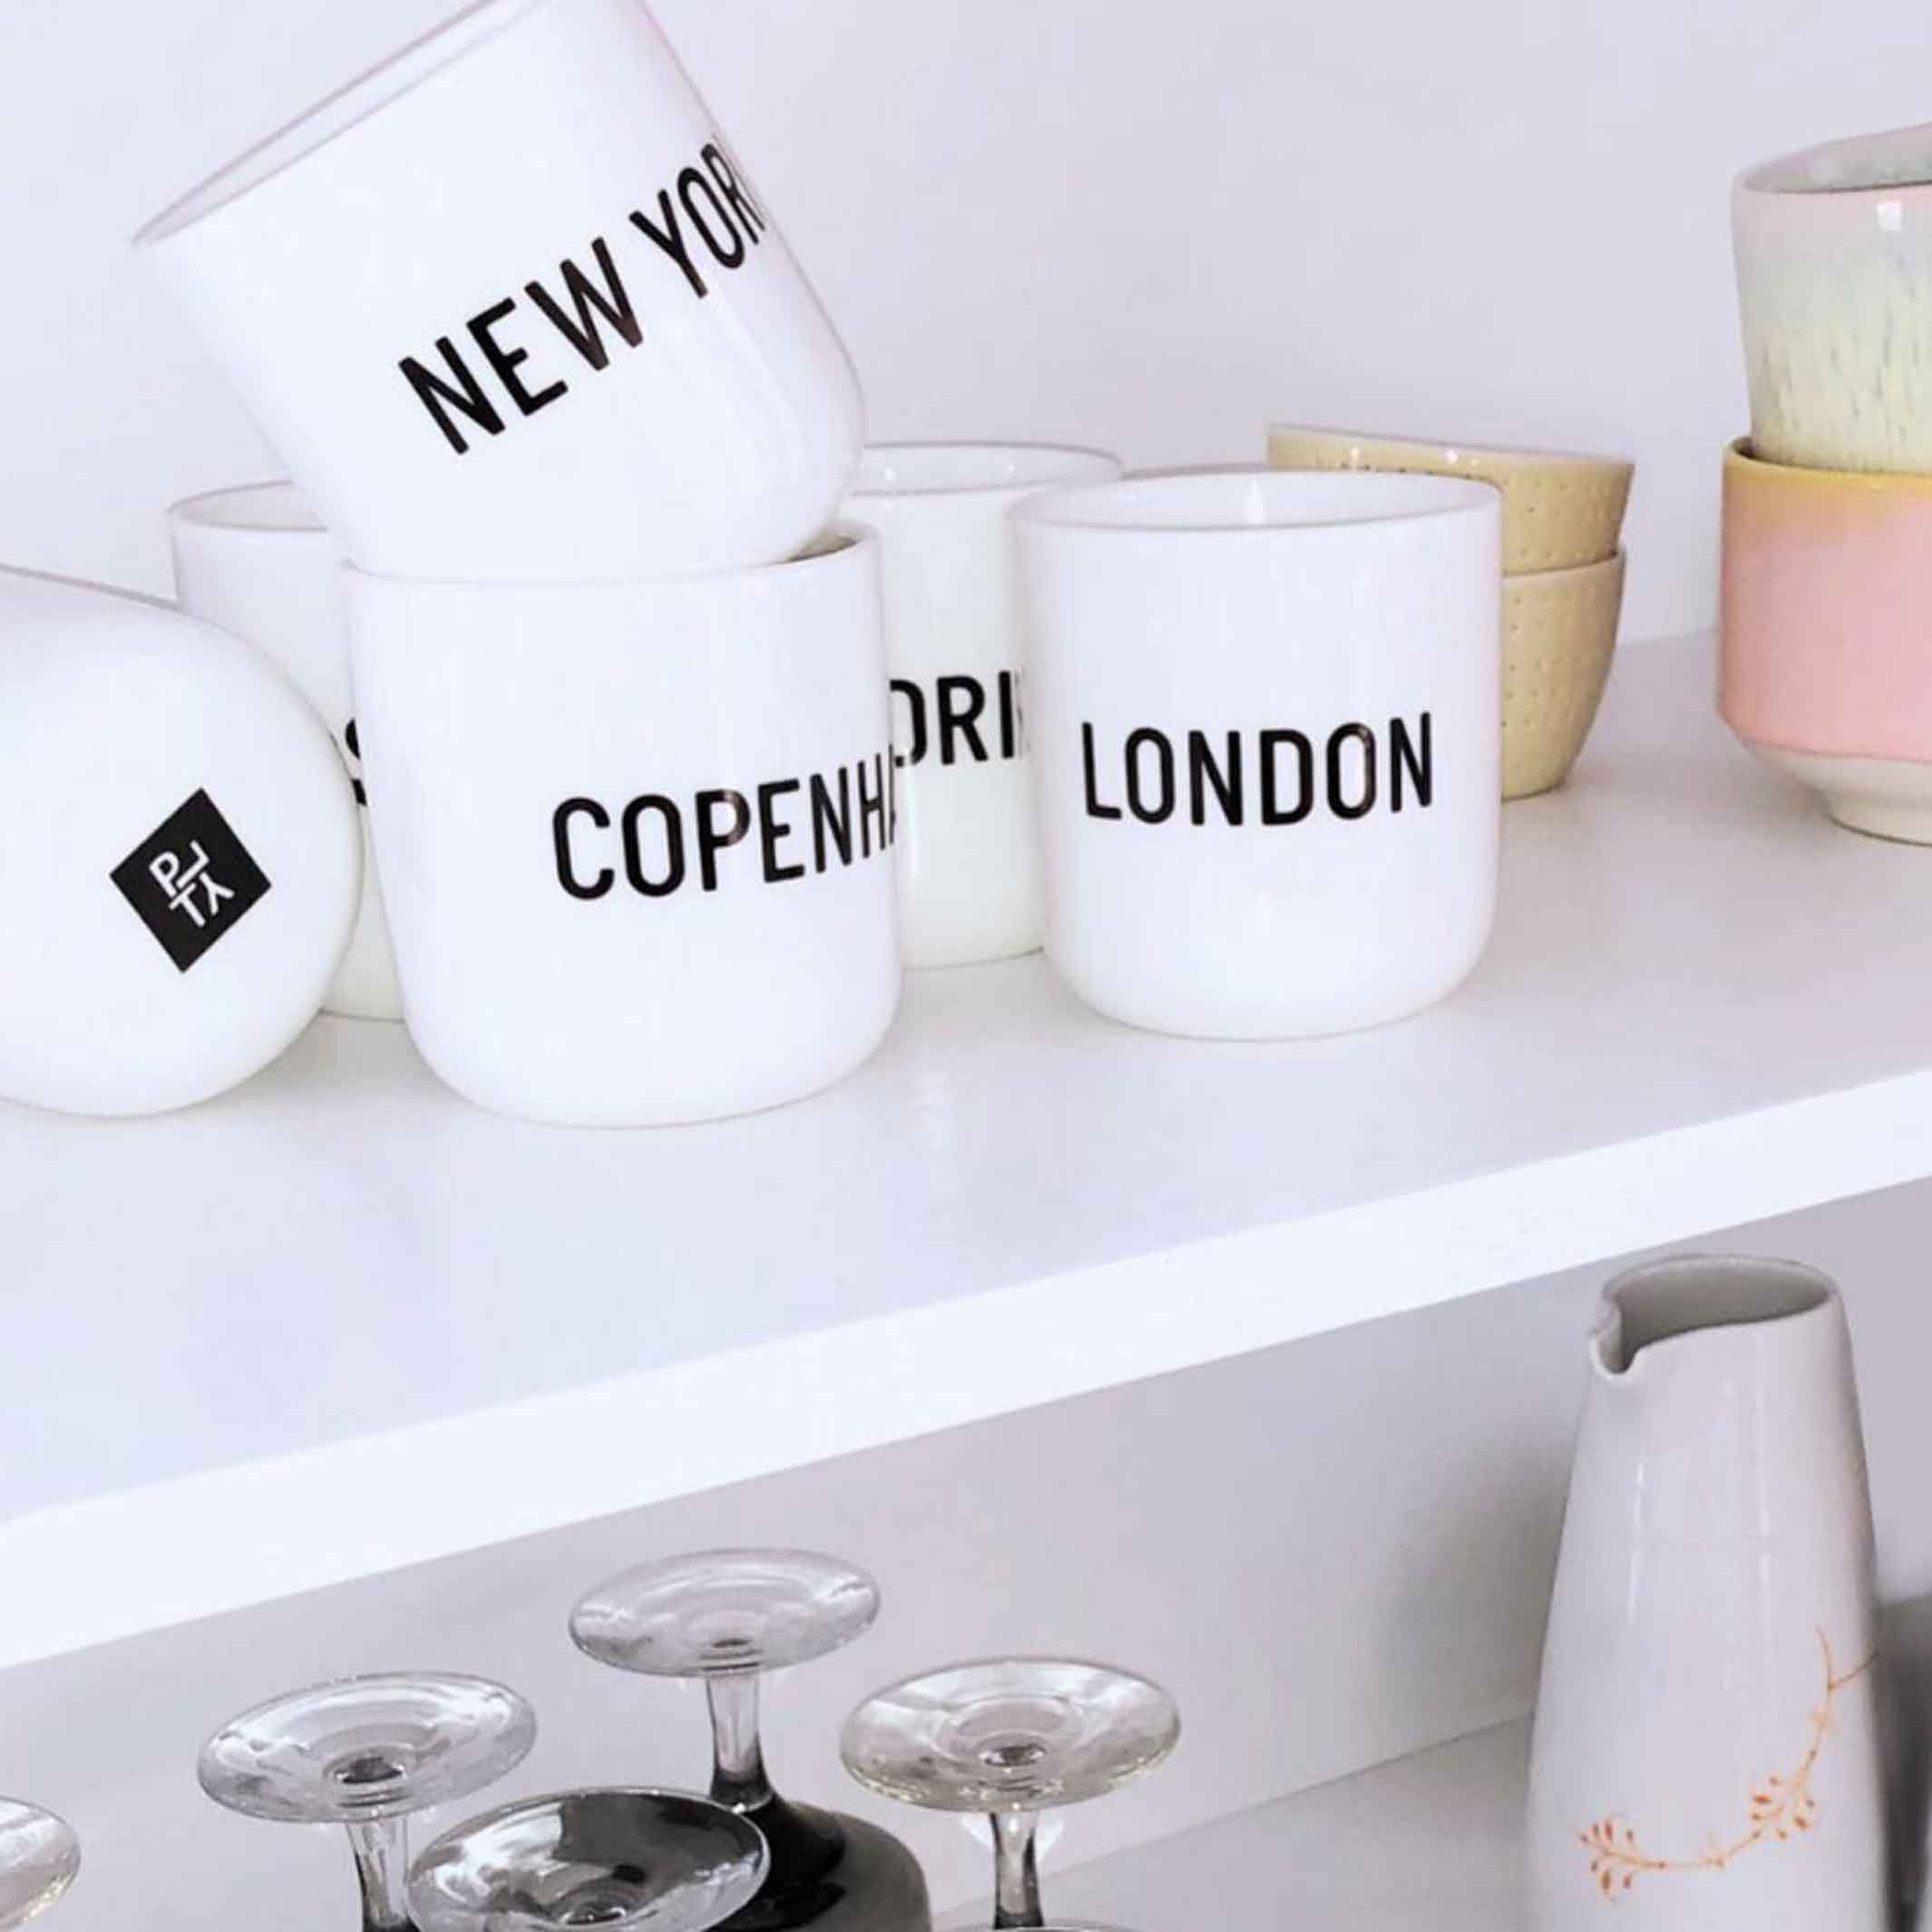 NEW YORK | white coffee & tea MUG with black typo | City Collection | PLTY